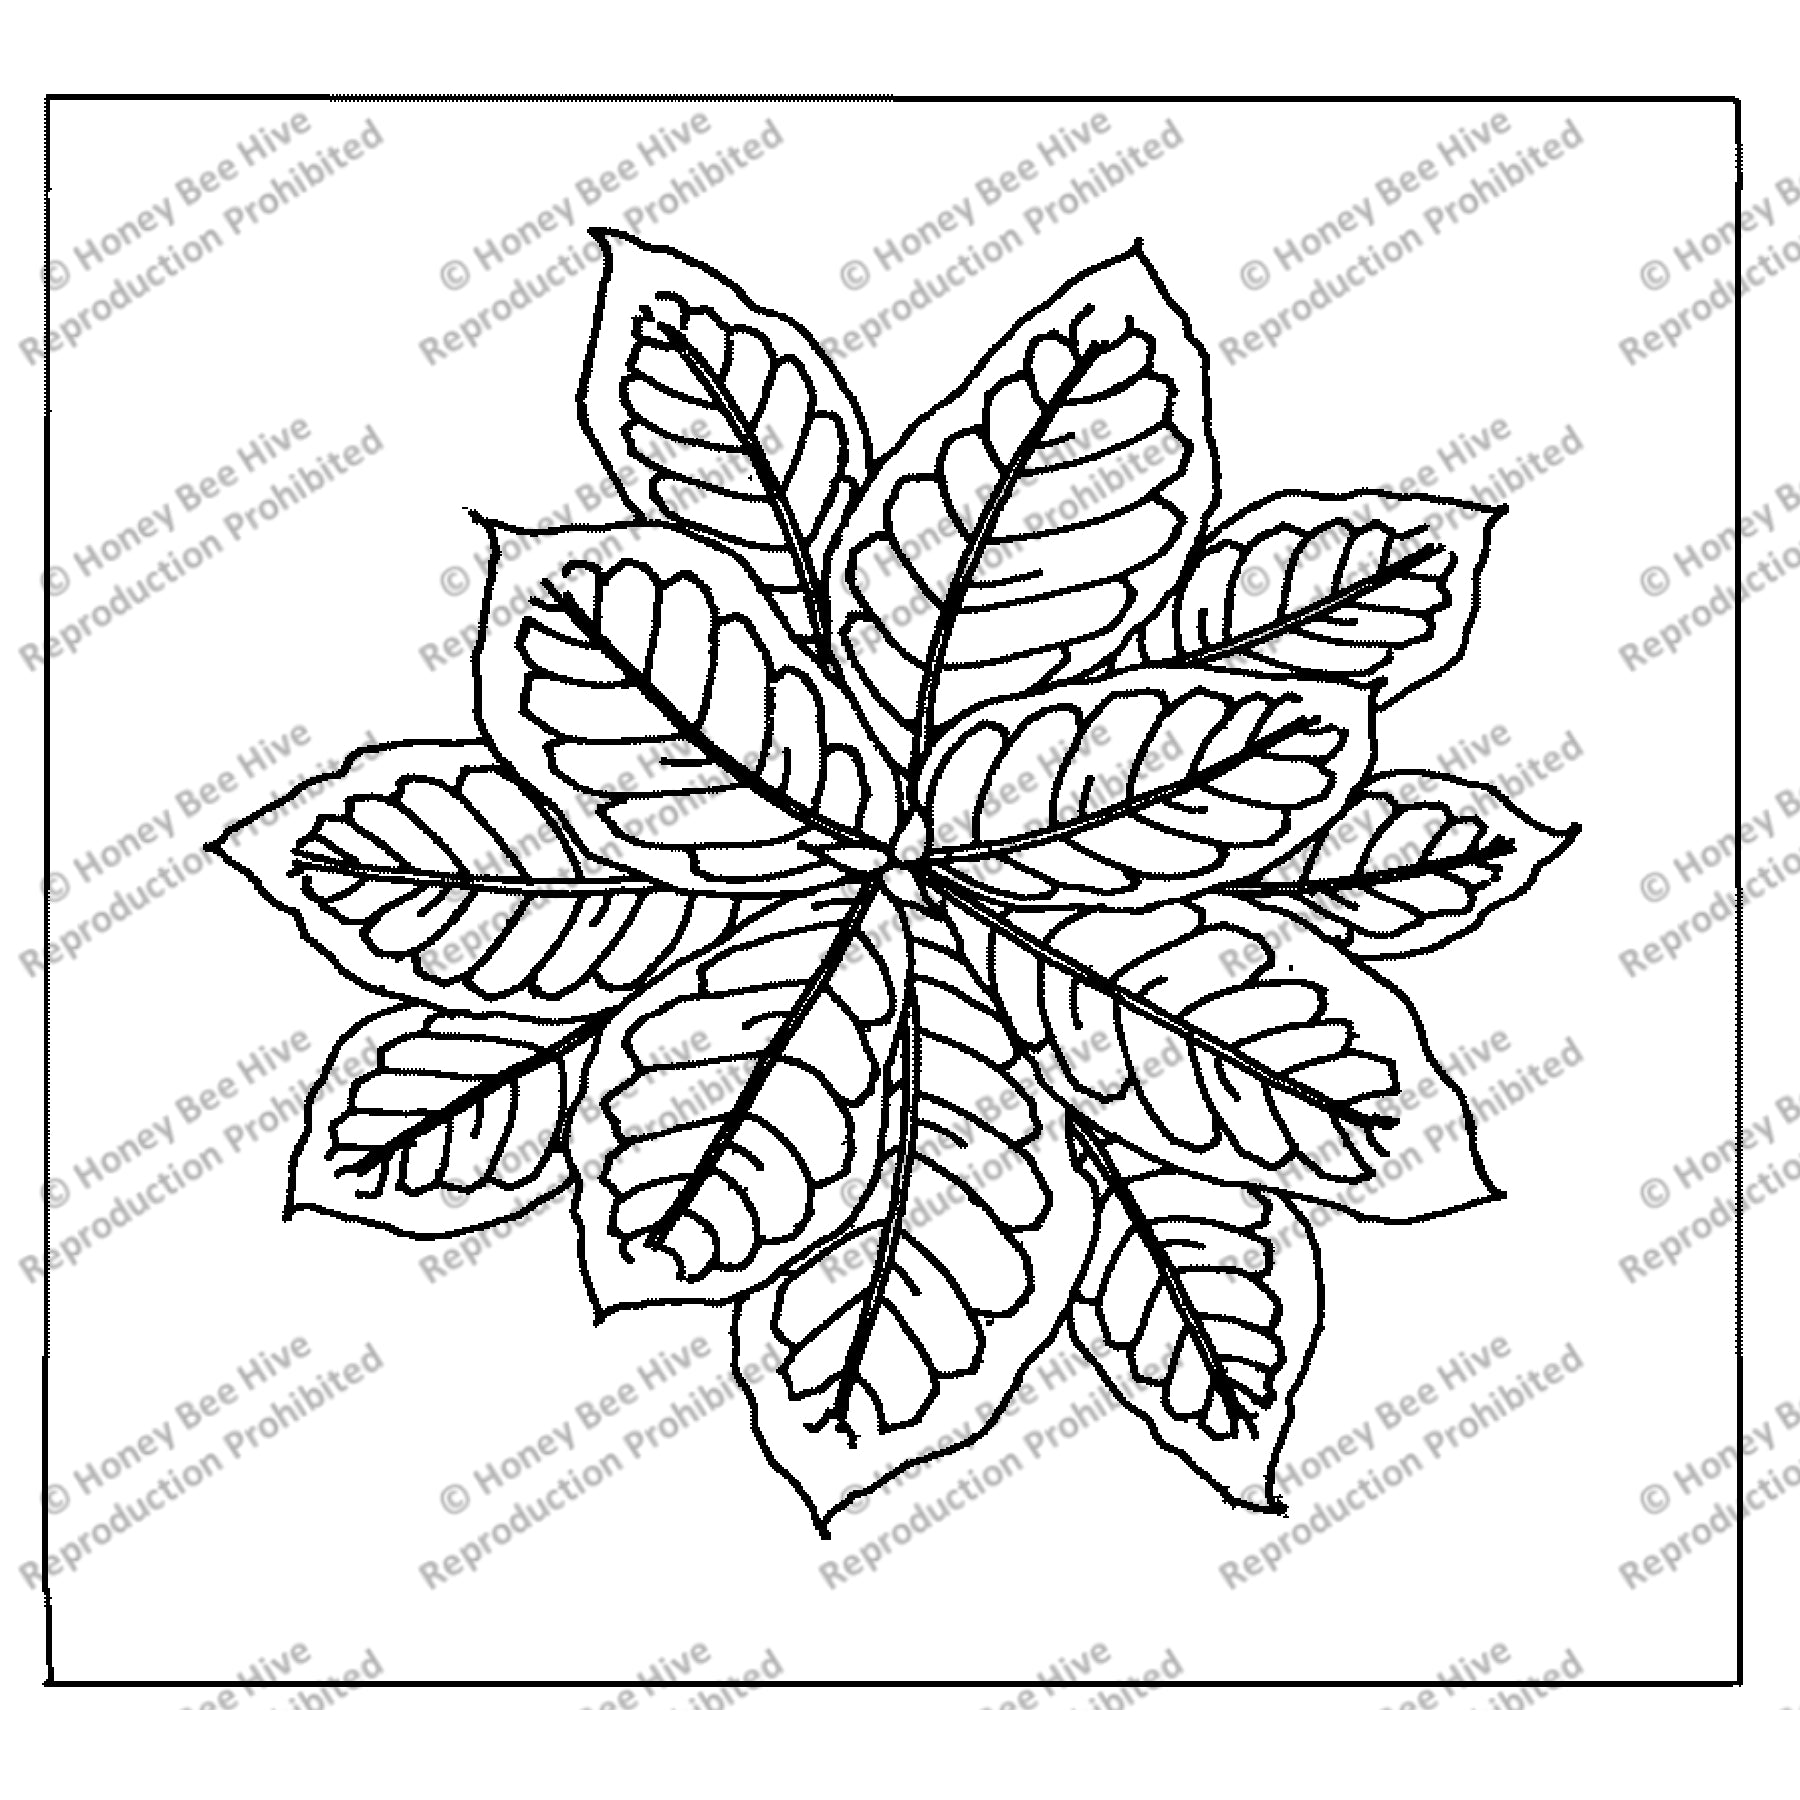 Circle Of Croton Leaves, rug hooking pattern